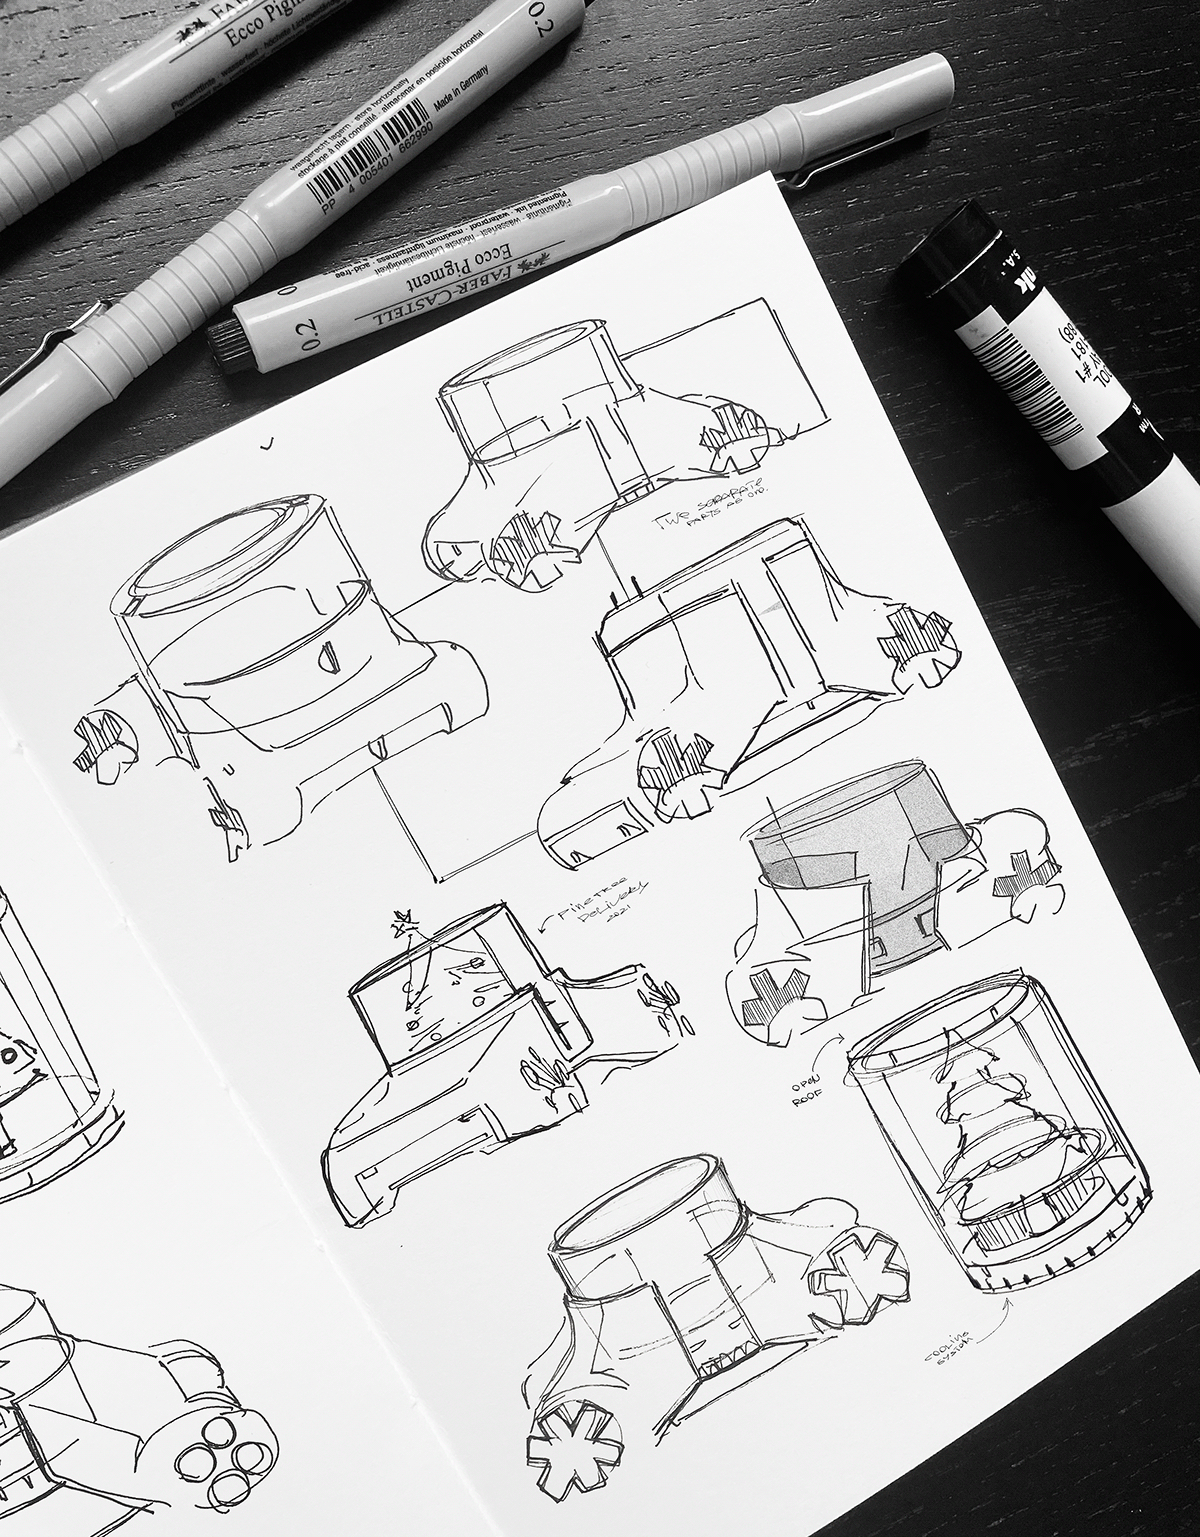 sketches cardesign design Automotive design Cars Render concept Noai